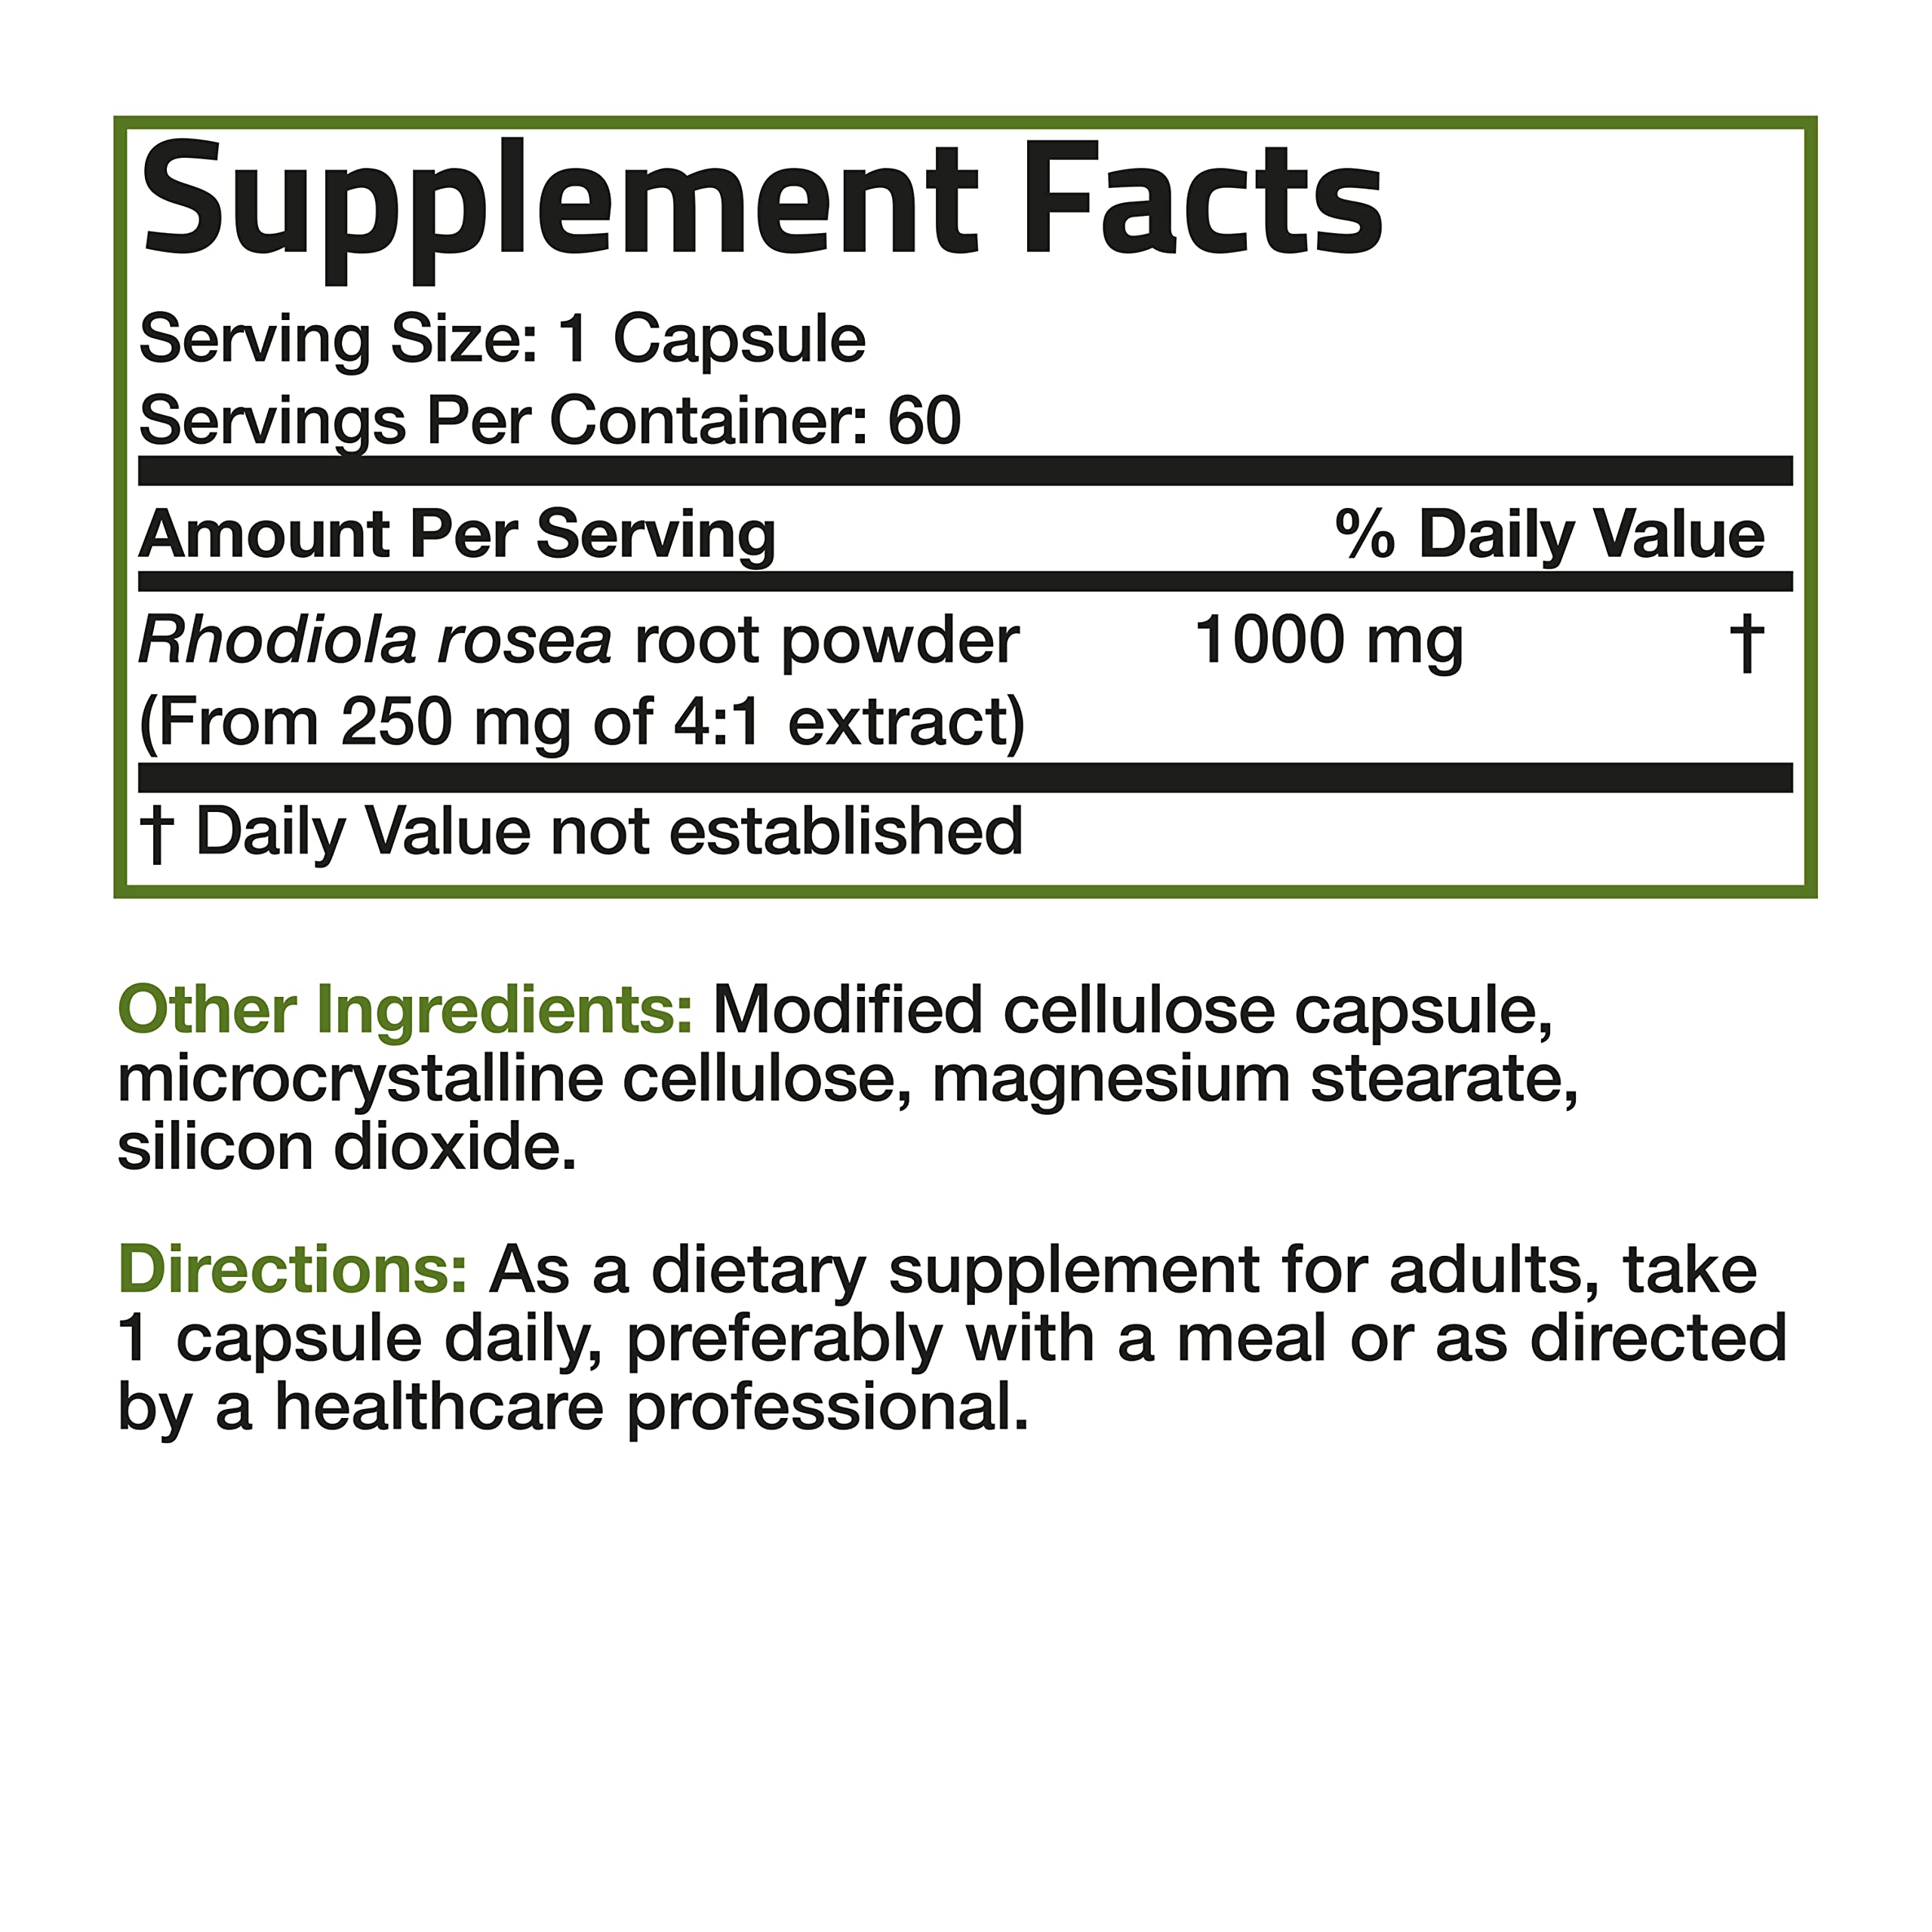 Bronson Rhodiola Rosea 1000 mg - Adaptogenic Herb for Brain, Stress & Mood Support - Non-GMO, 60 Vegetarian Capsules